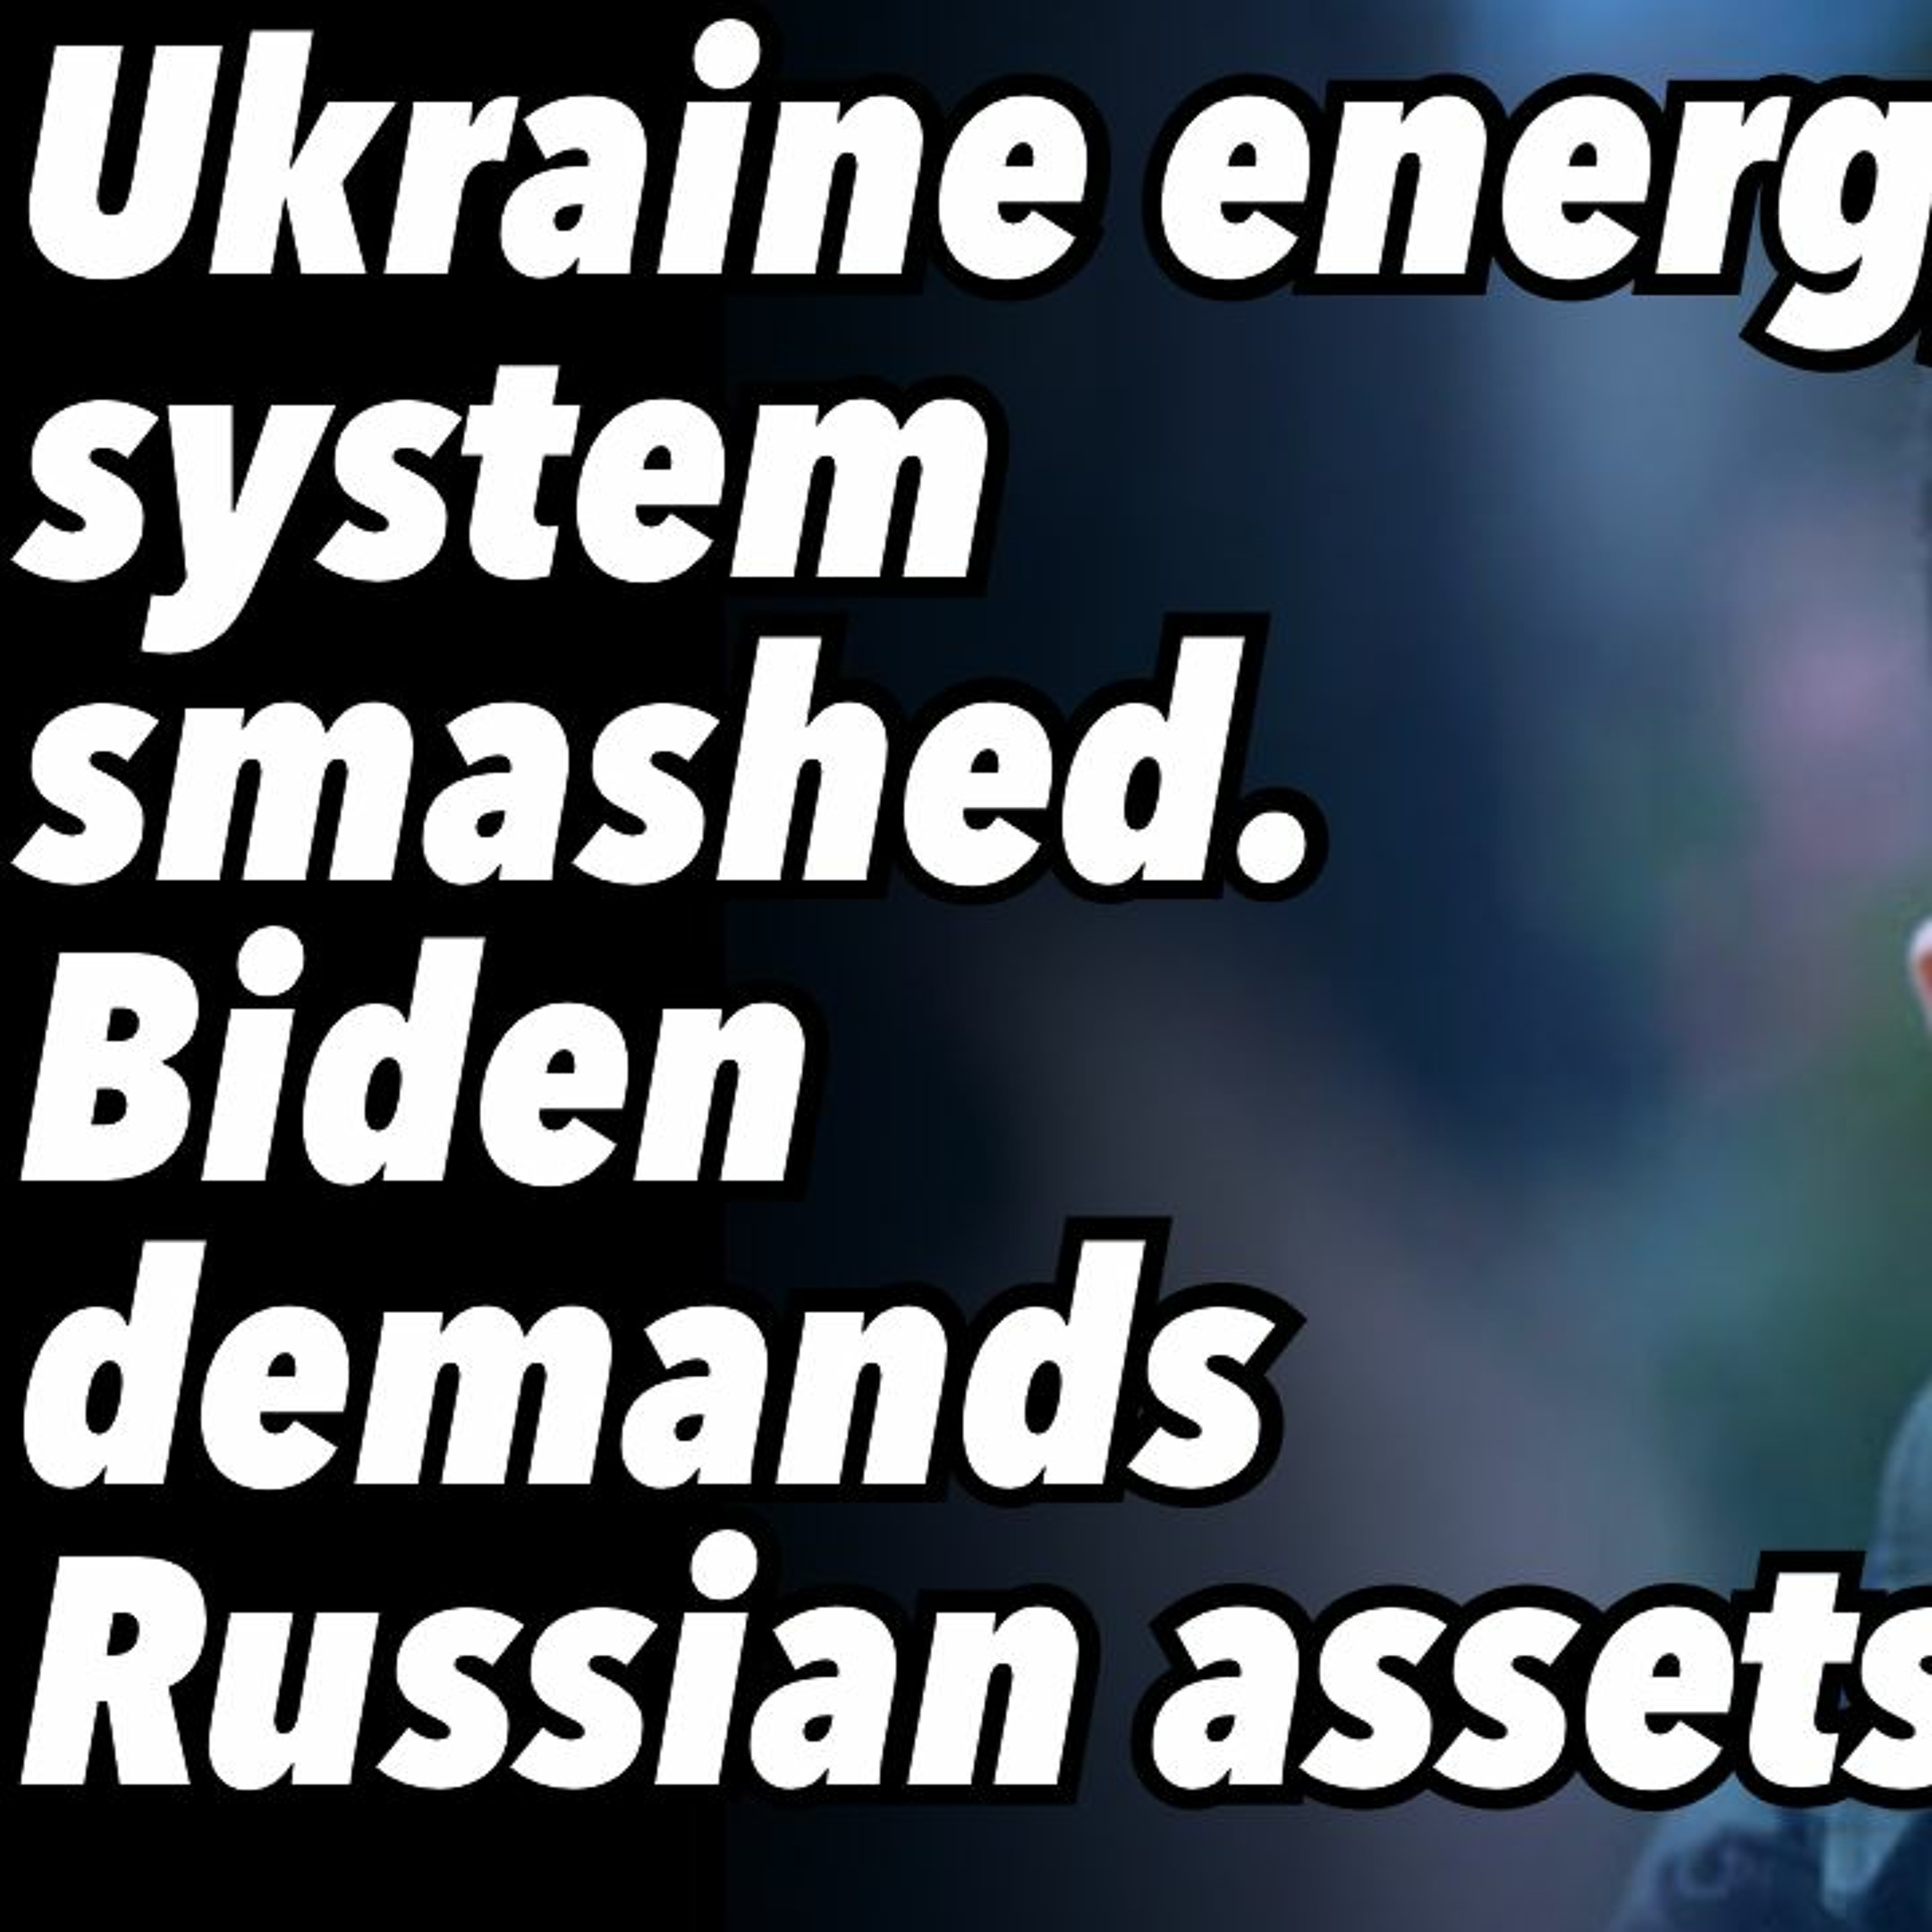 Ukraine energy system smashed. Biden demands Russian assets